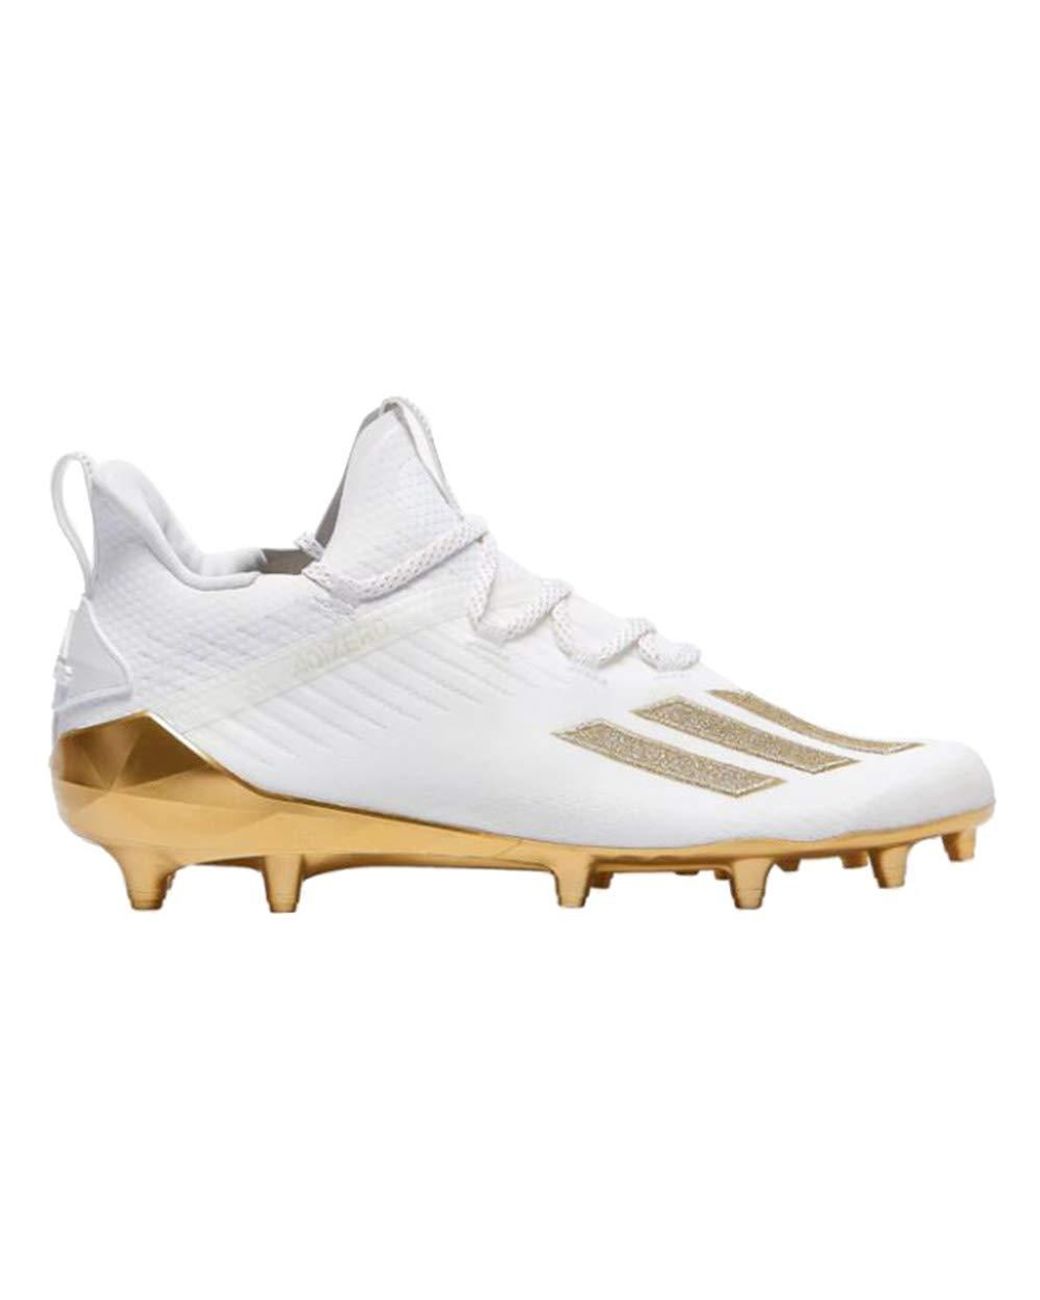 adidas Adizero Football Shoe in White/Gold/Gold (Metallic) for Men - Lyst